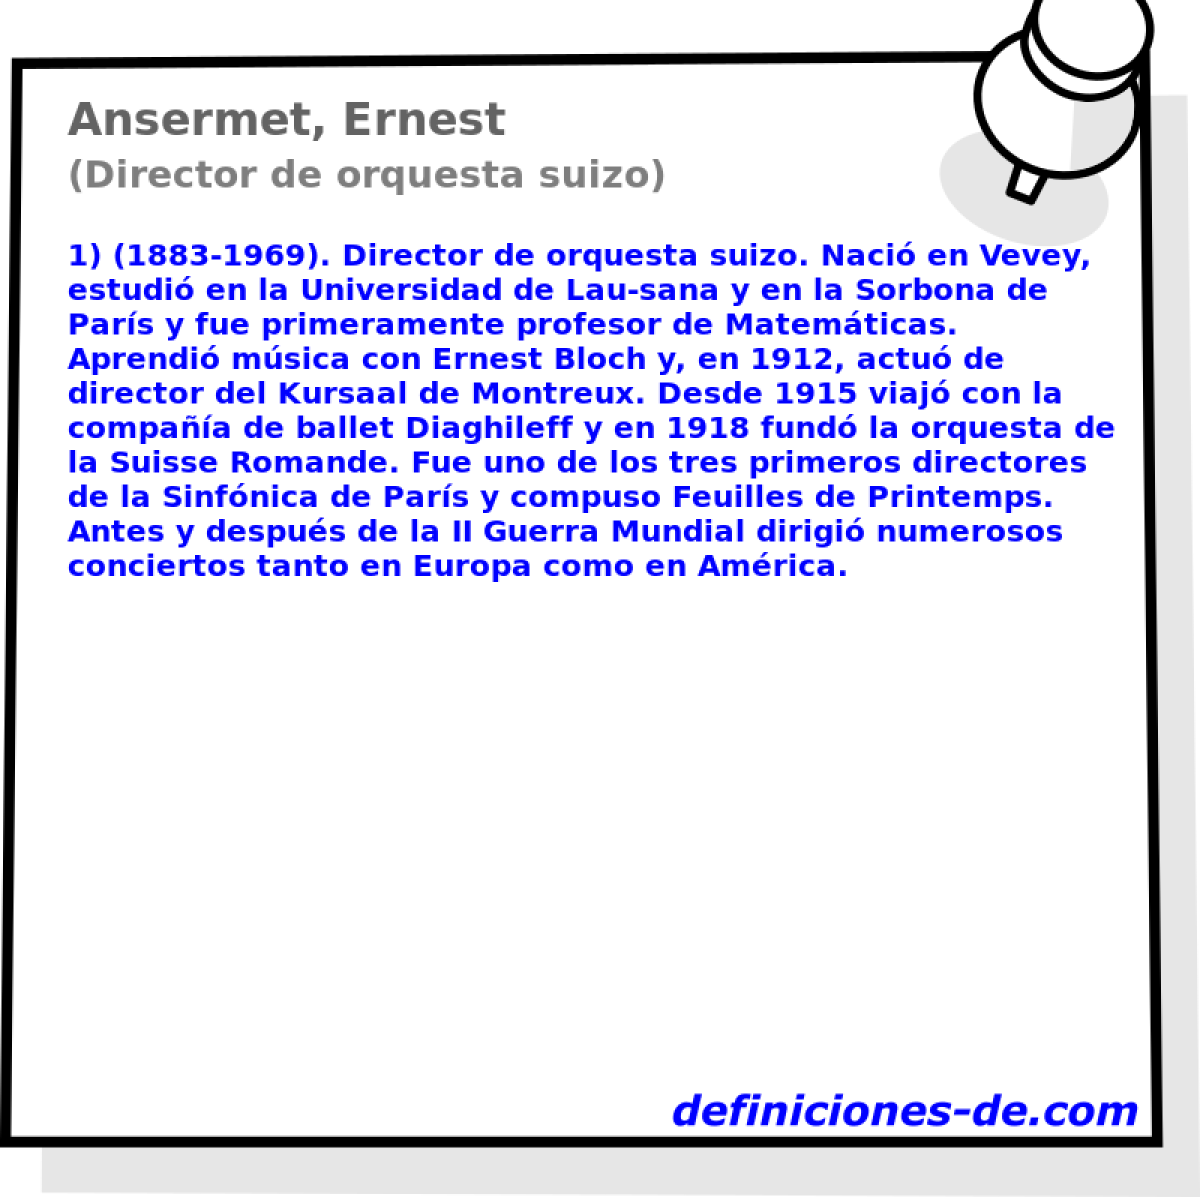 Ansermet, Ernest (Director de orquesta suizo)